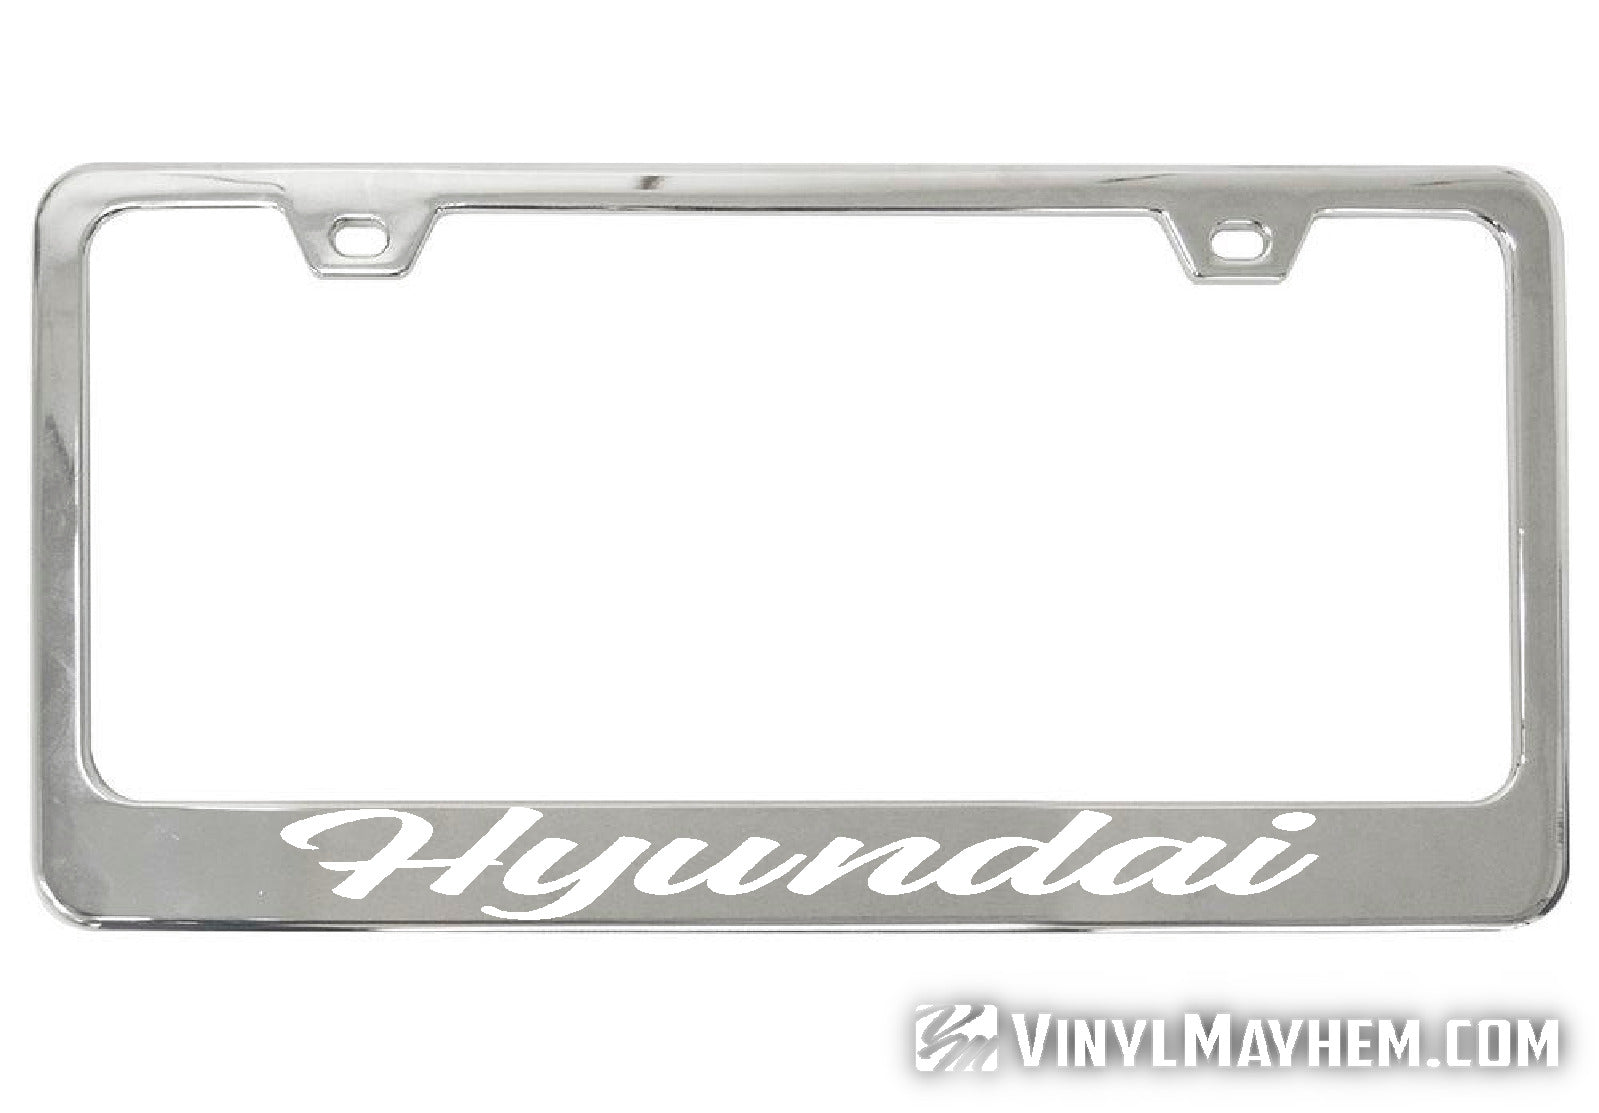 Hyundai chrome license plate frame